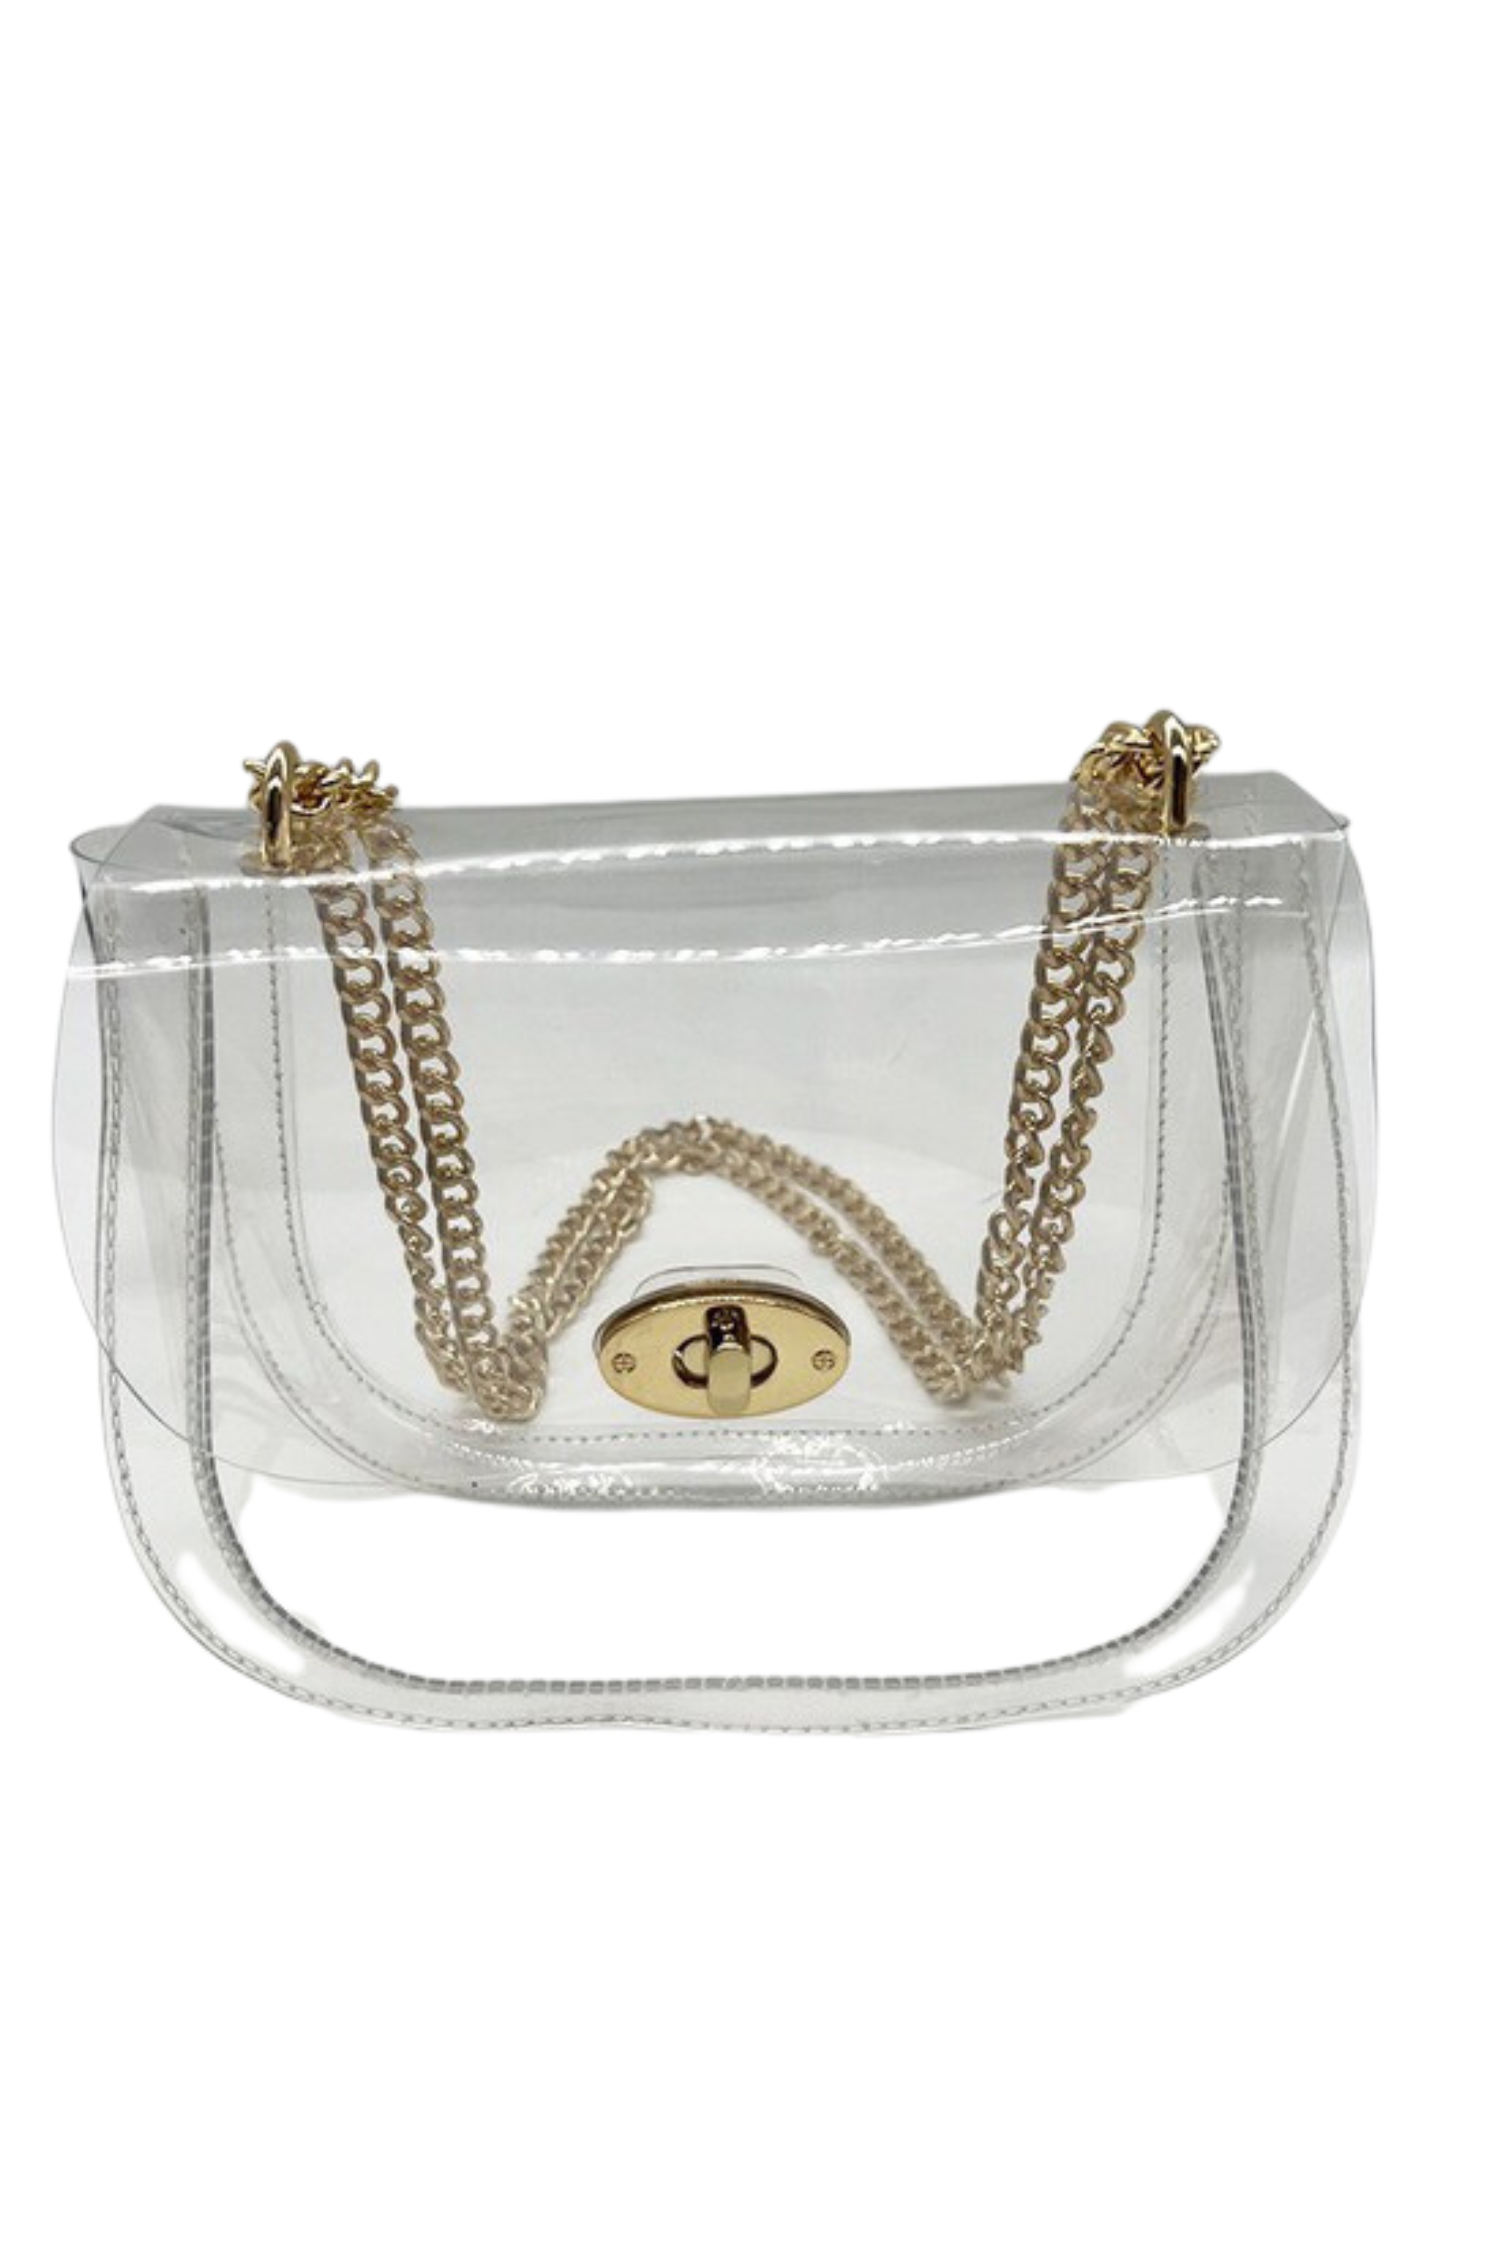 Kylie Cosmetics Handbags